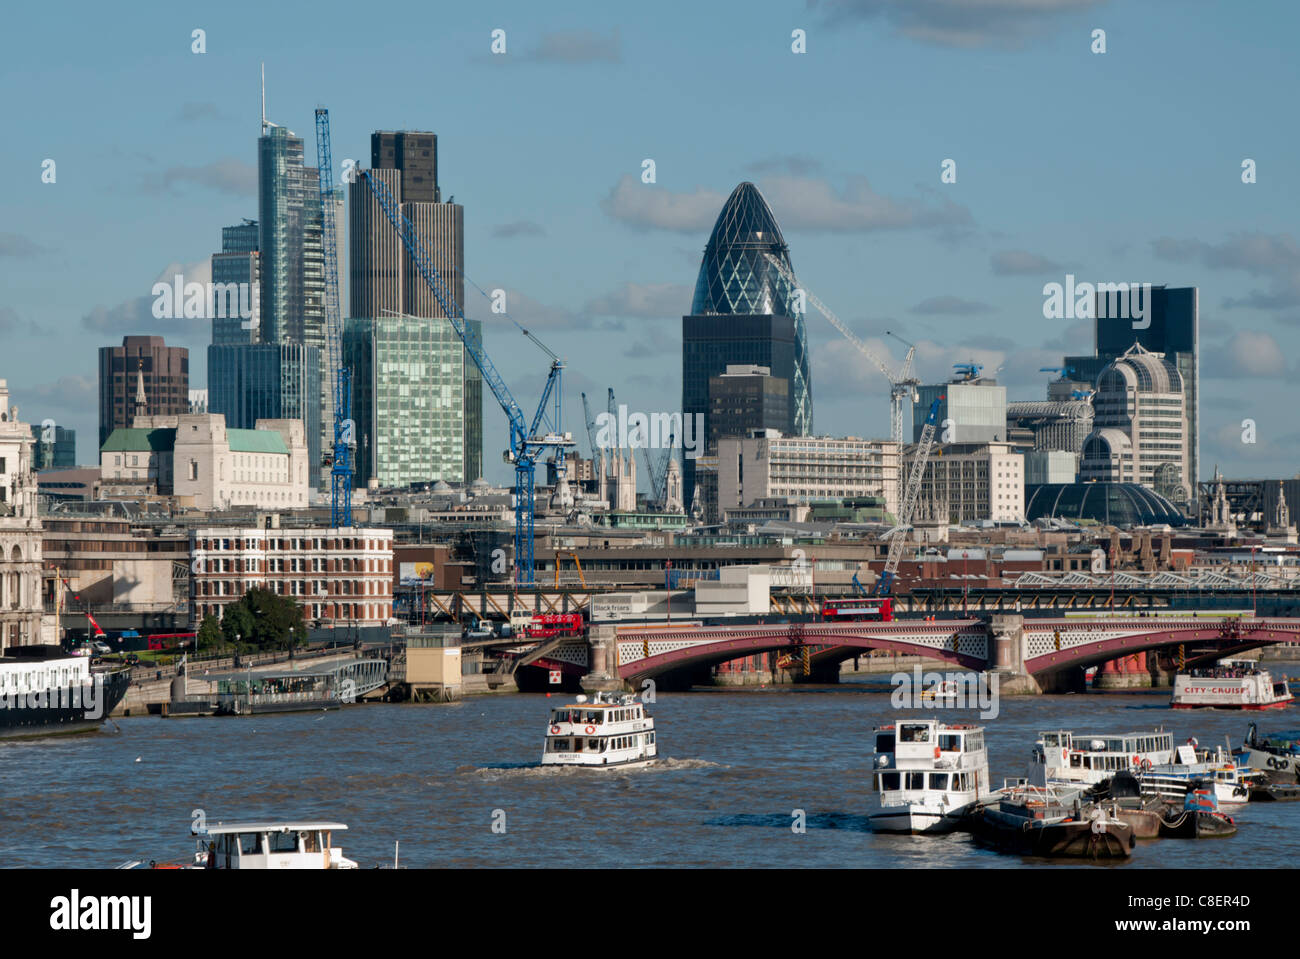 City skyline with Heron Tower, London, England, United Kingdom Stock Photo